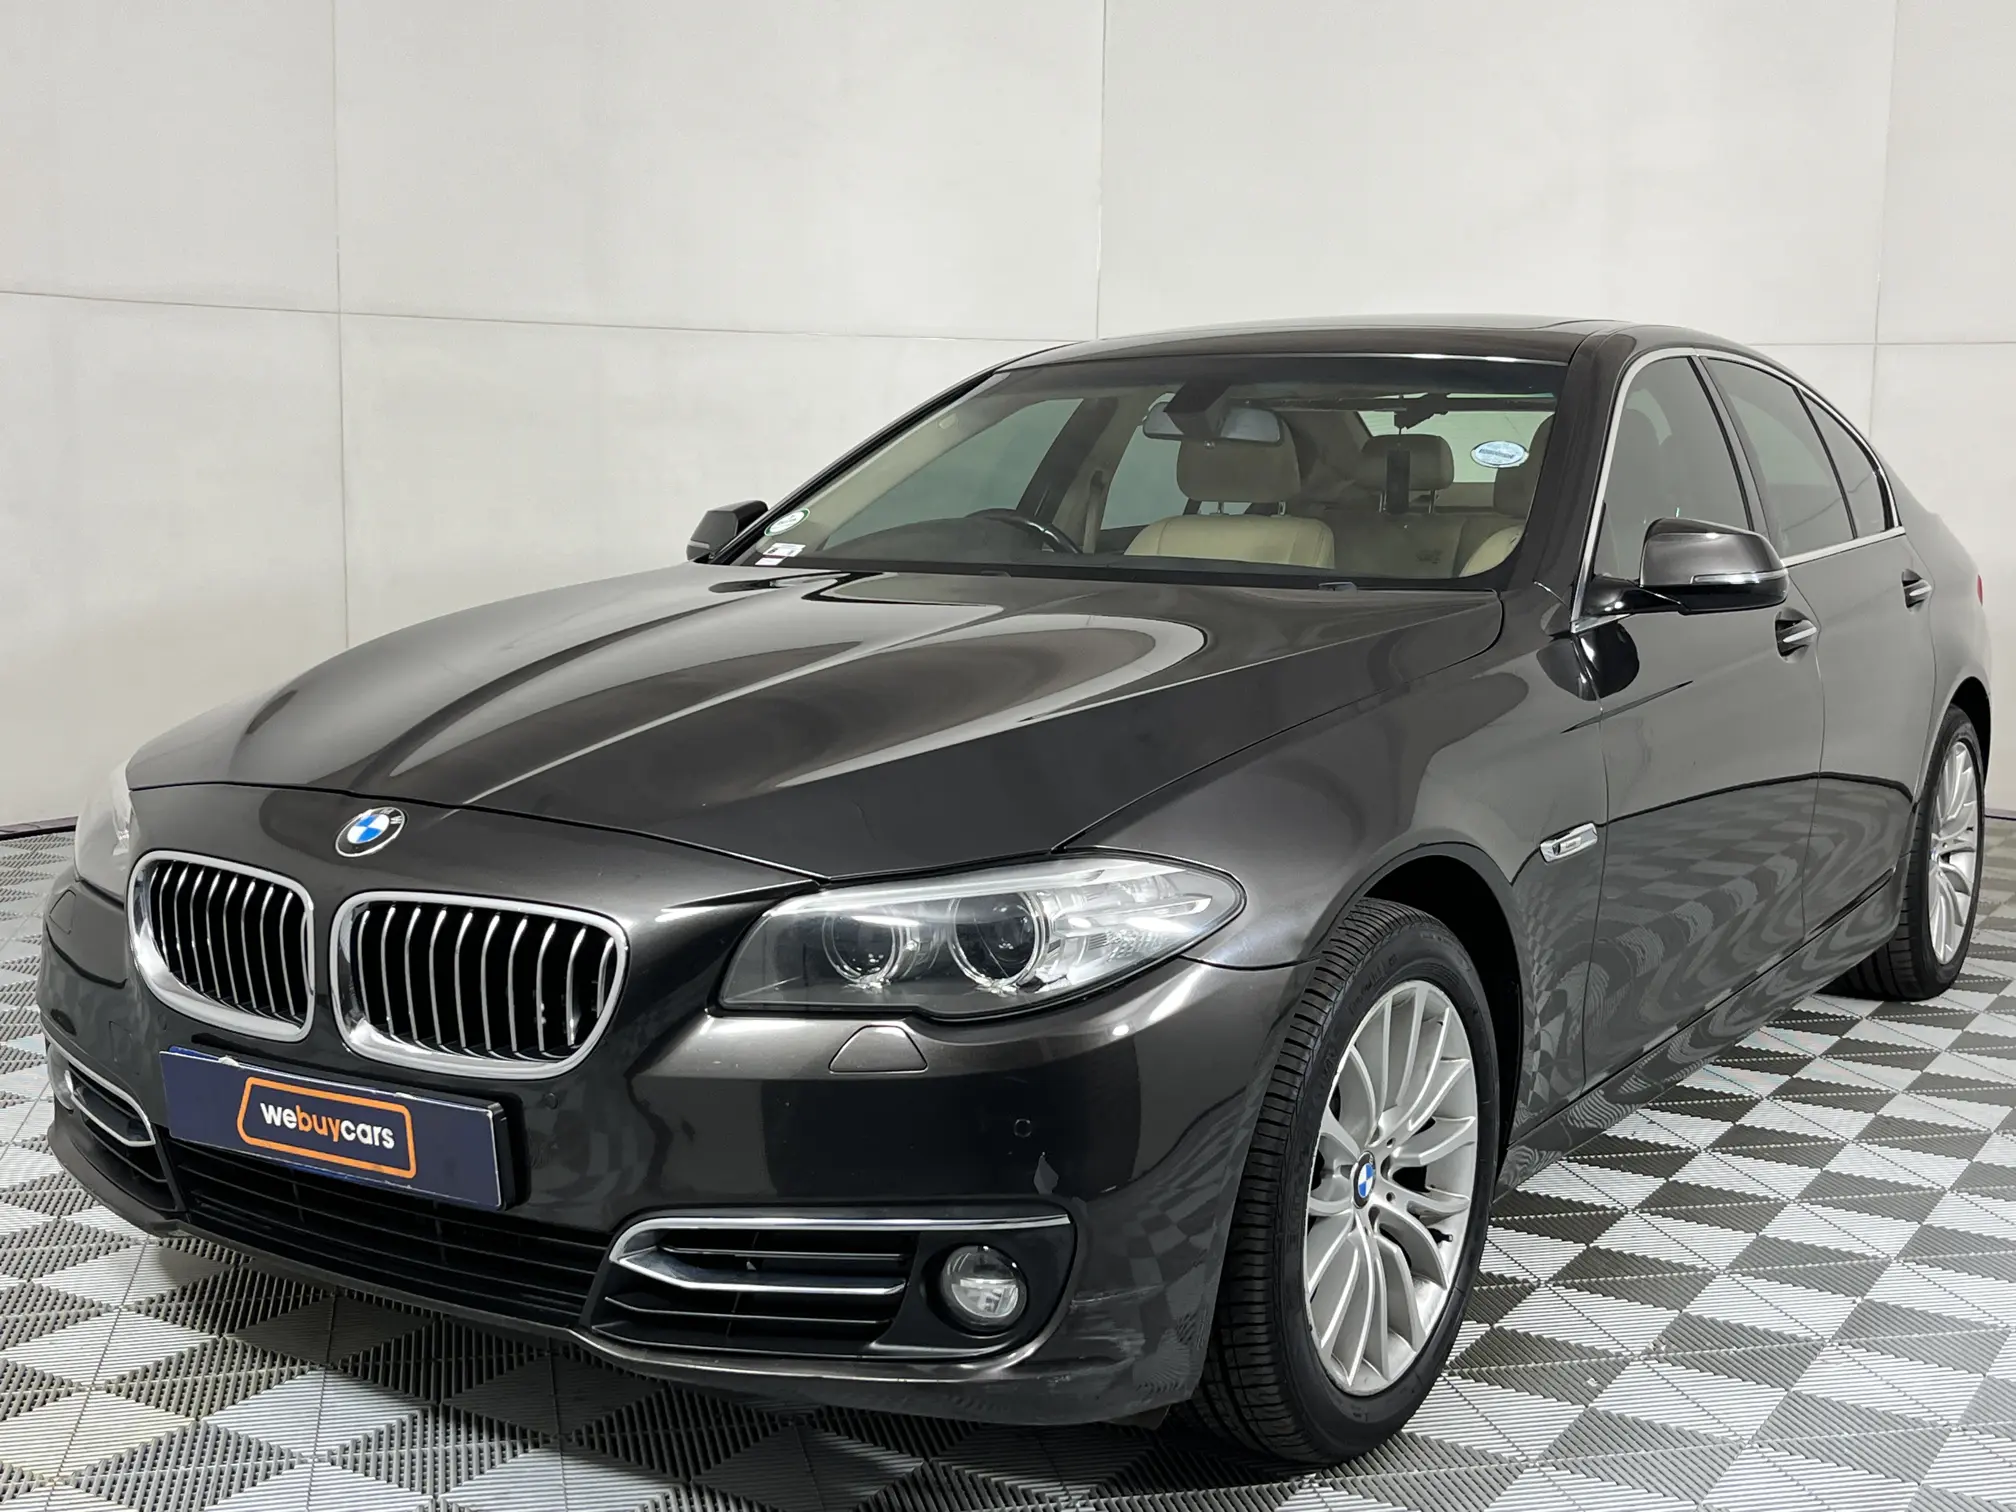 2014 BMW 5 Series 520i Auto (F10)